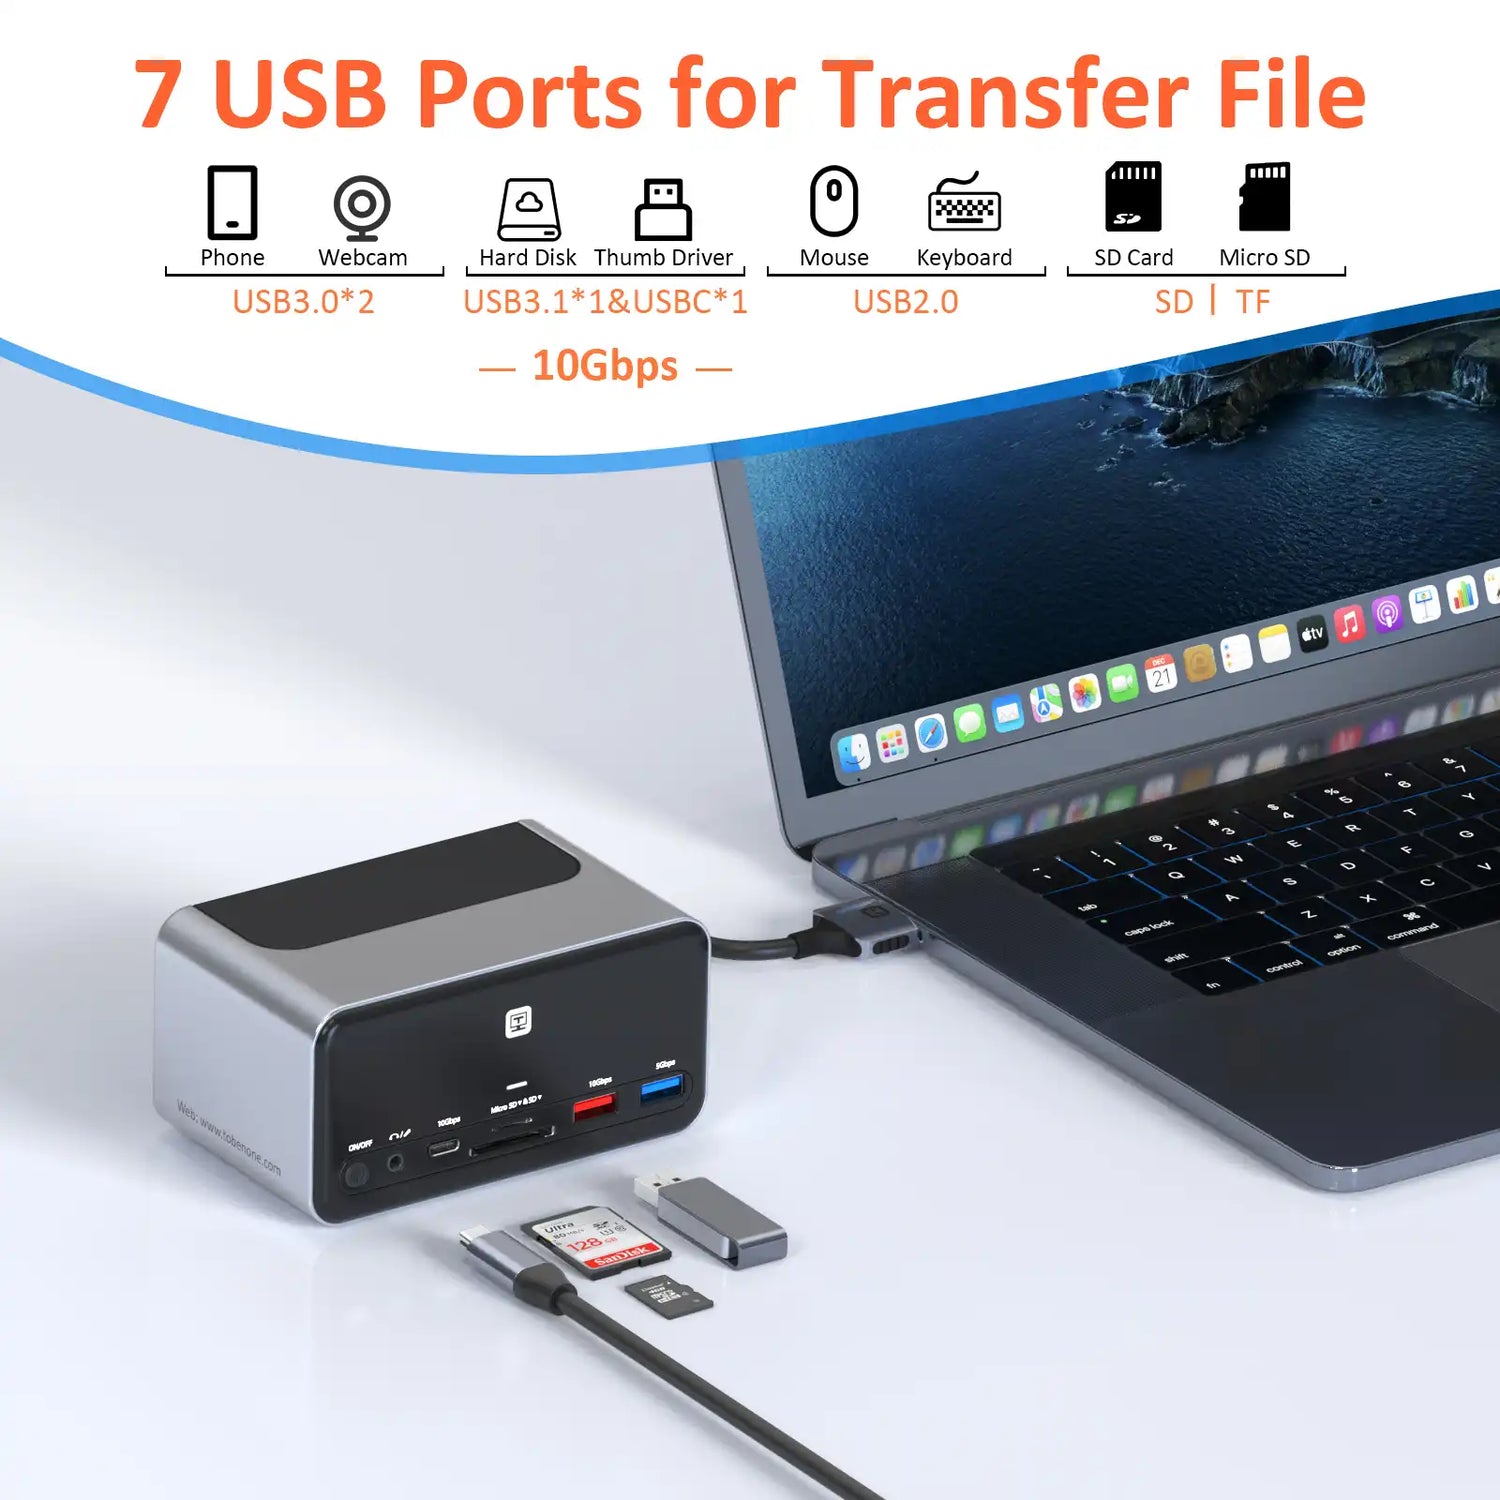 UDS025 docking station with 7 USB ports for transfer file